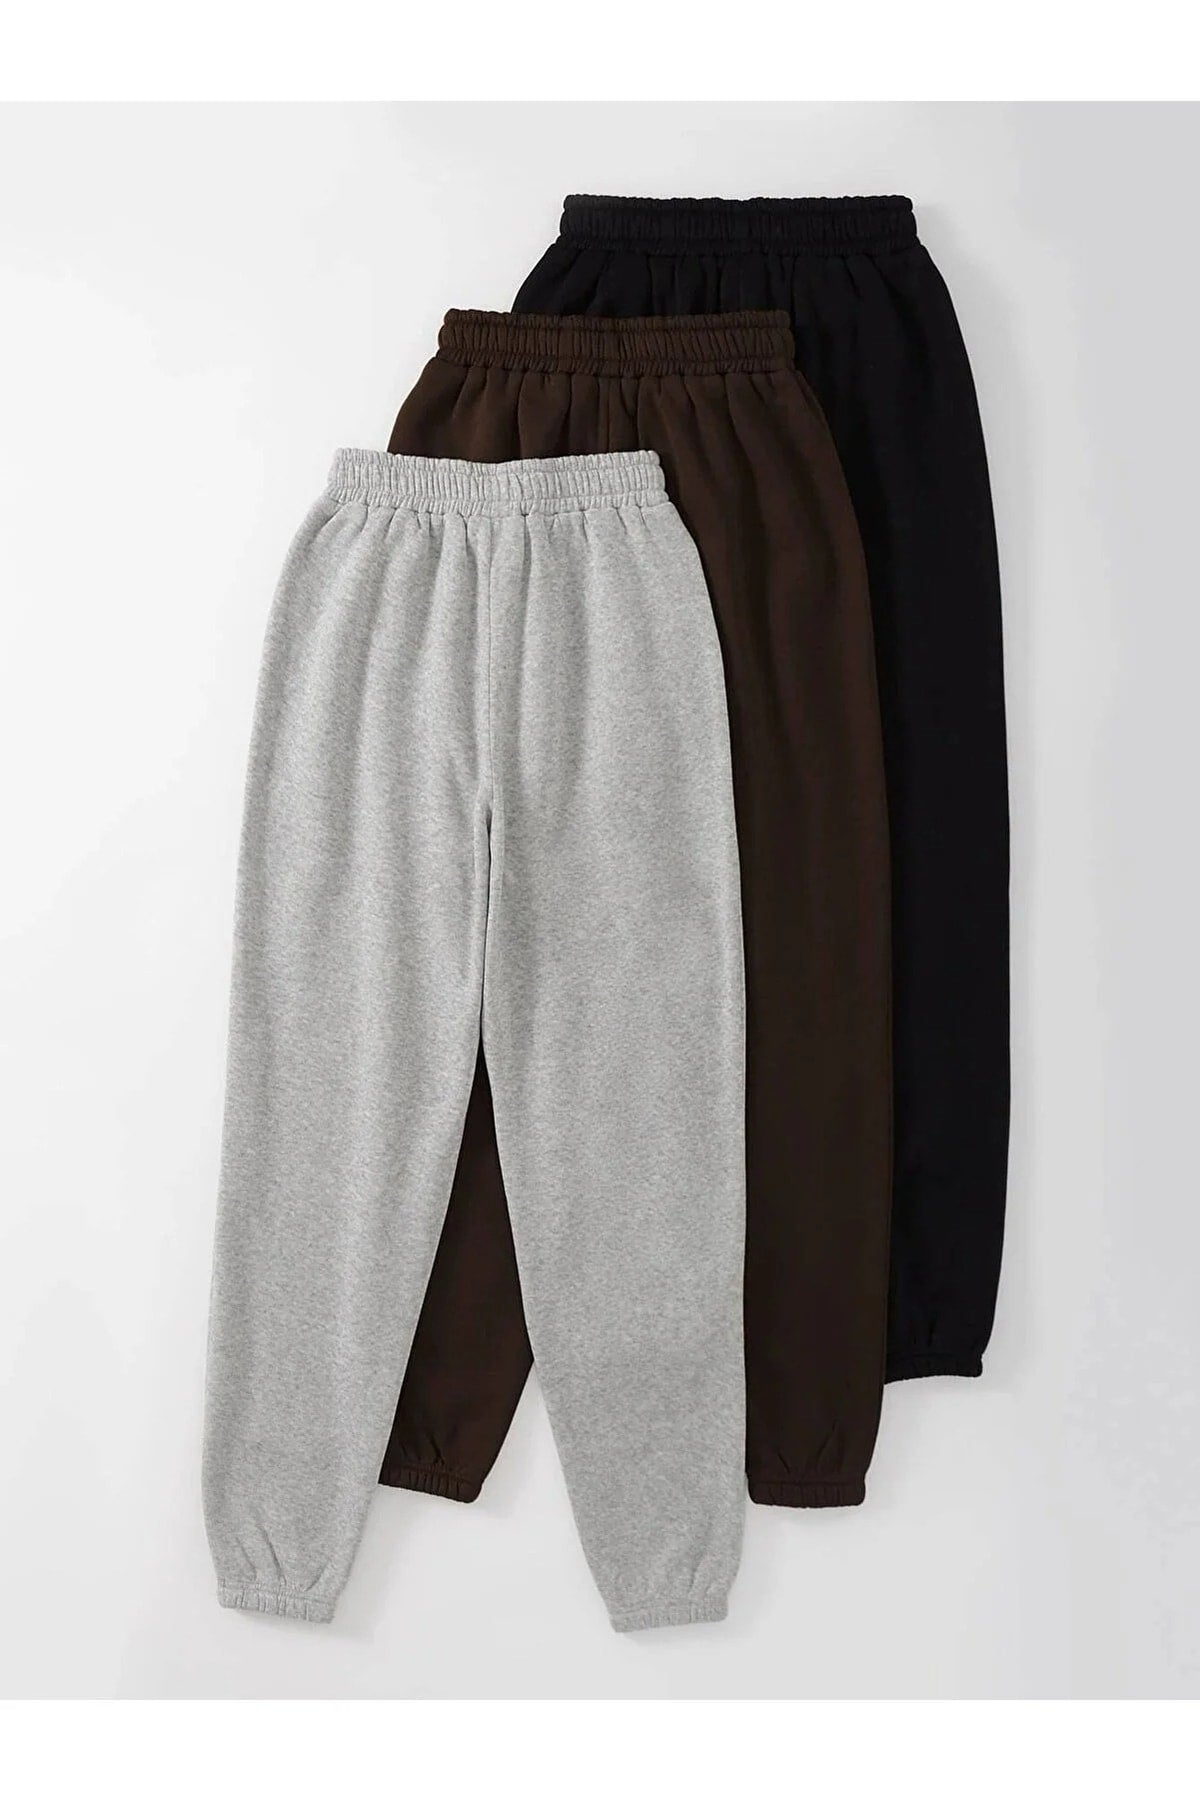 Chill 3-pack Jogger Sweatpants - Black, Gray And Brown, Printed, Elastic Leg, High Waist, Summer